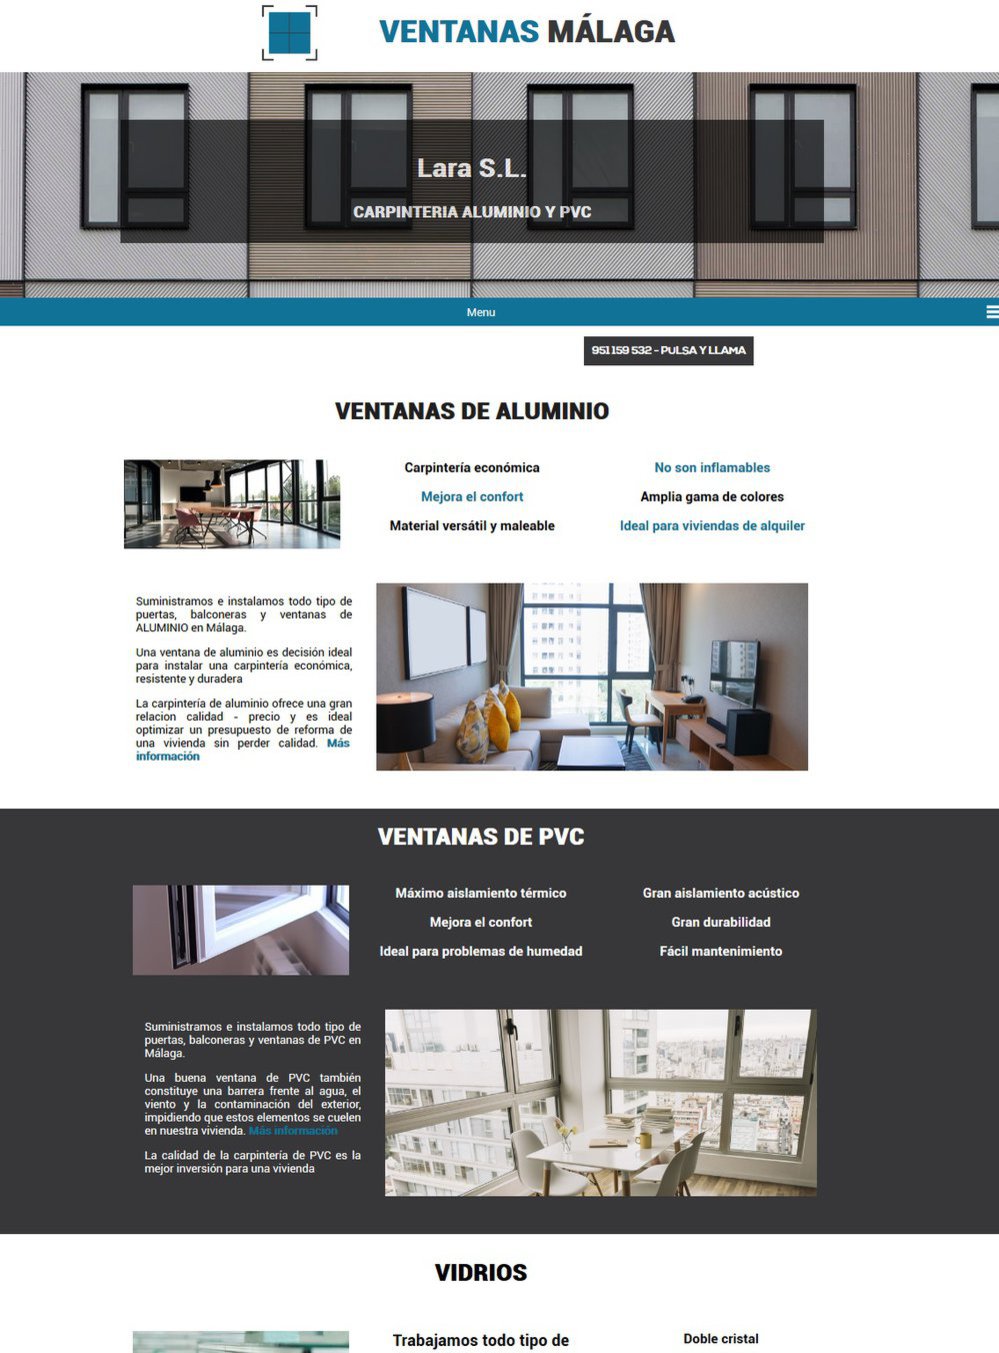 Alunoe - Ventanas de aluminio y PVC Malaga cover